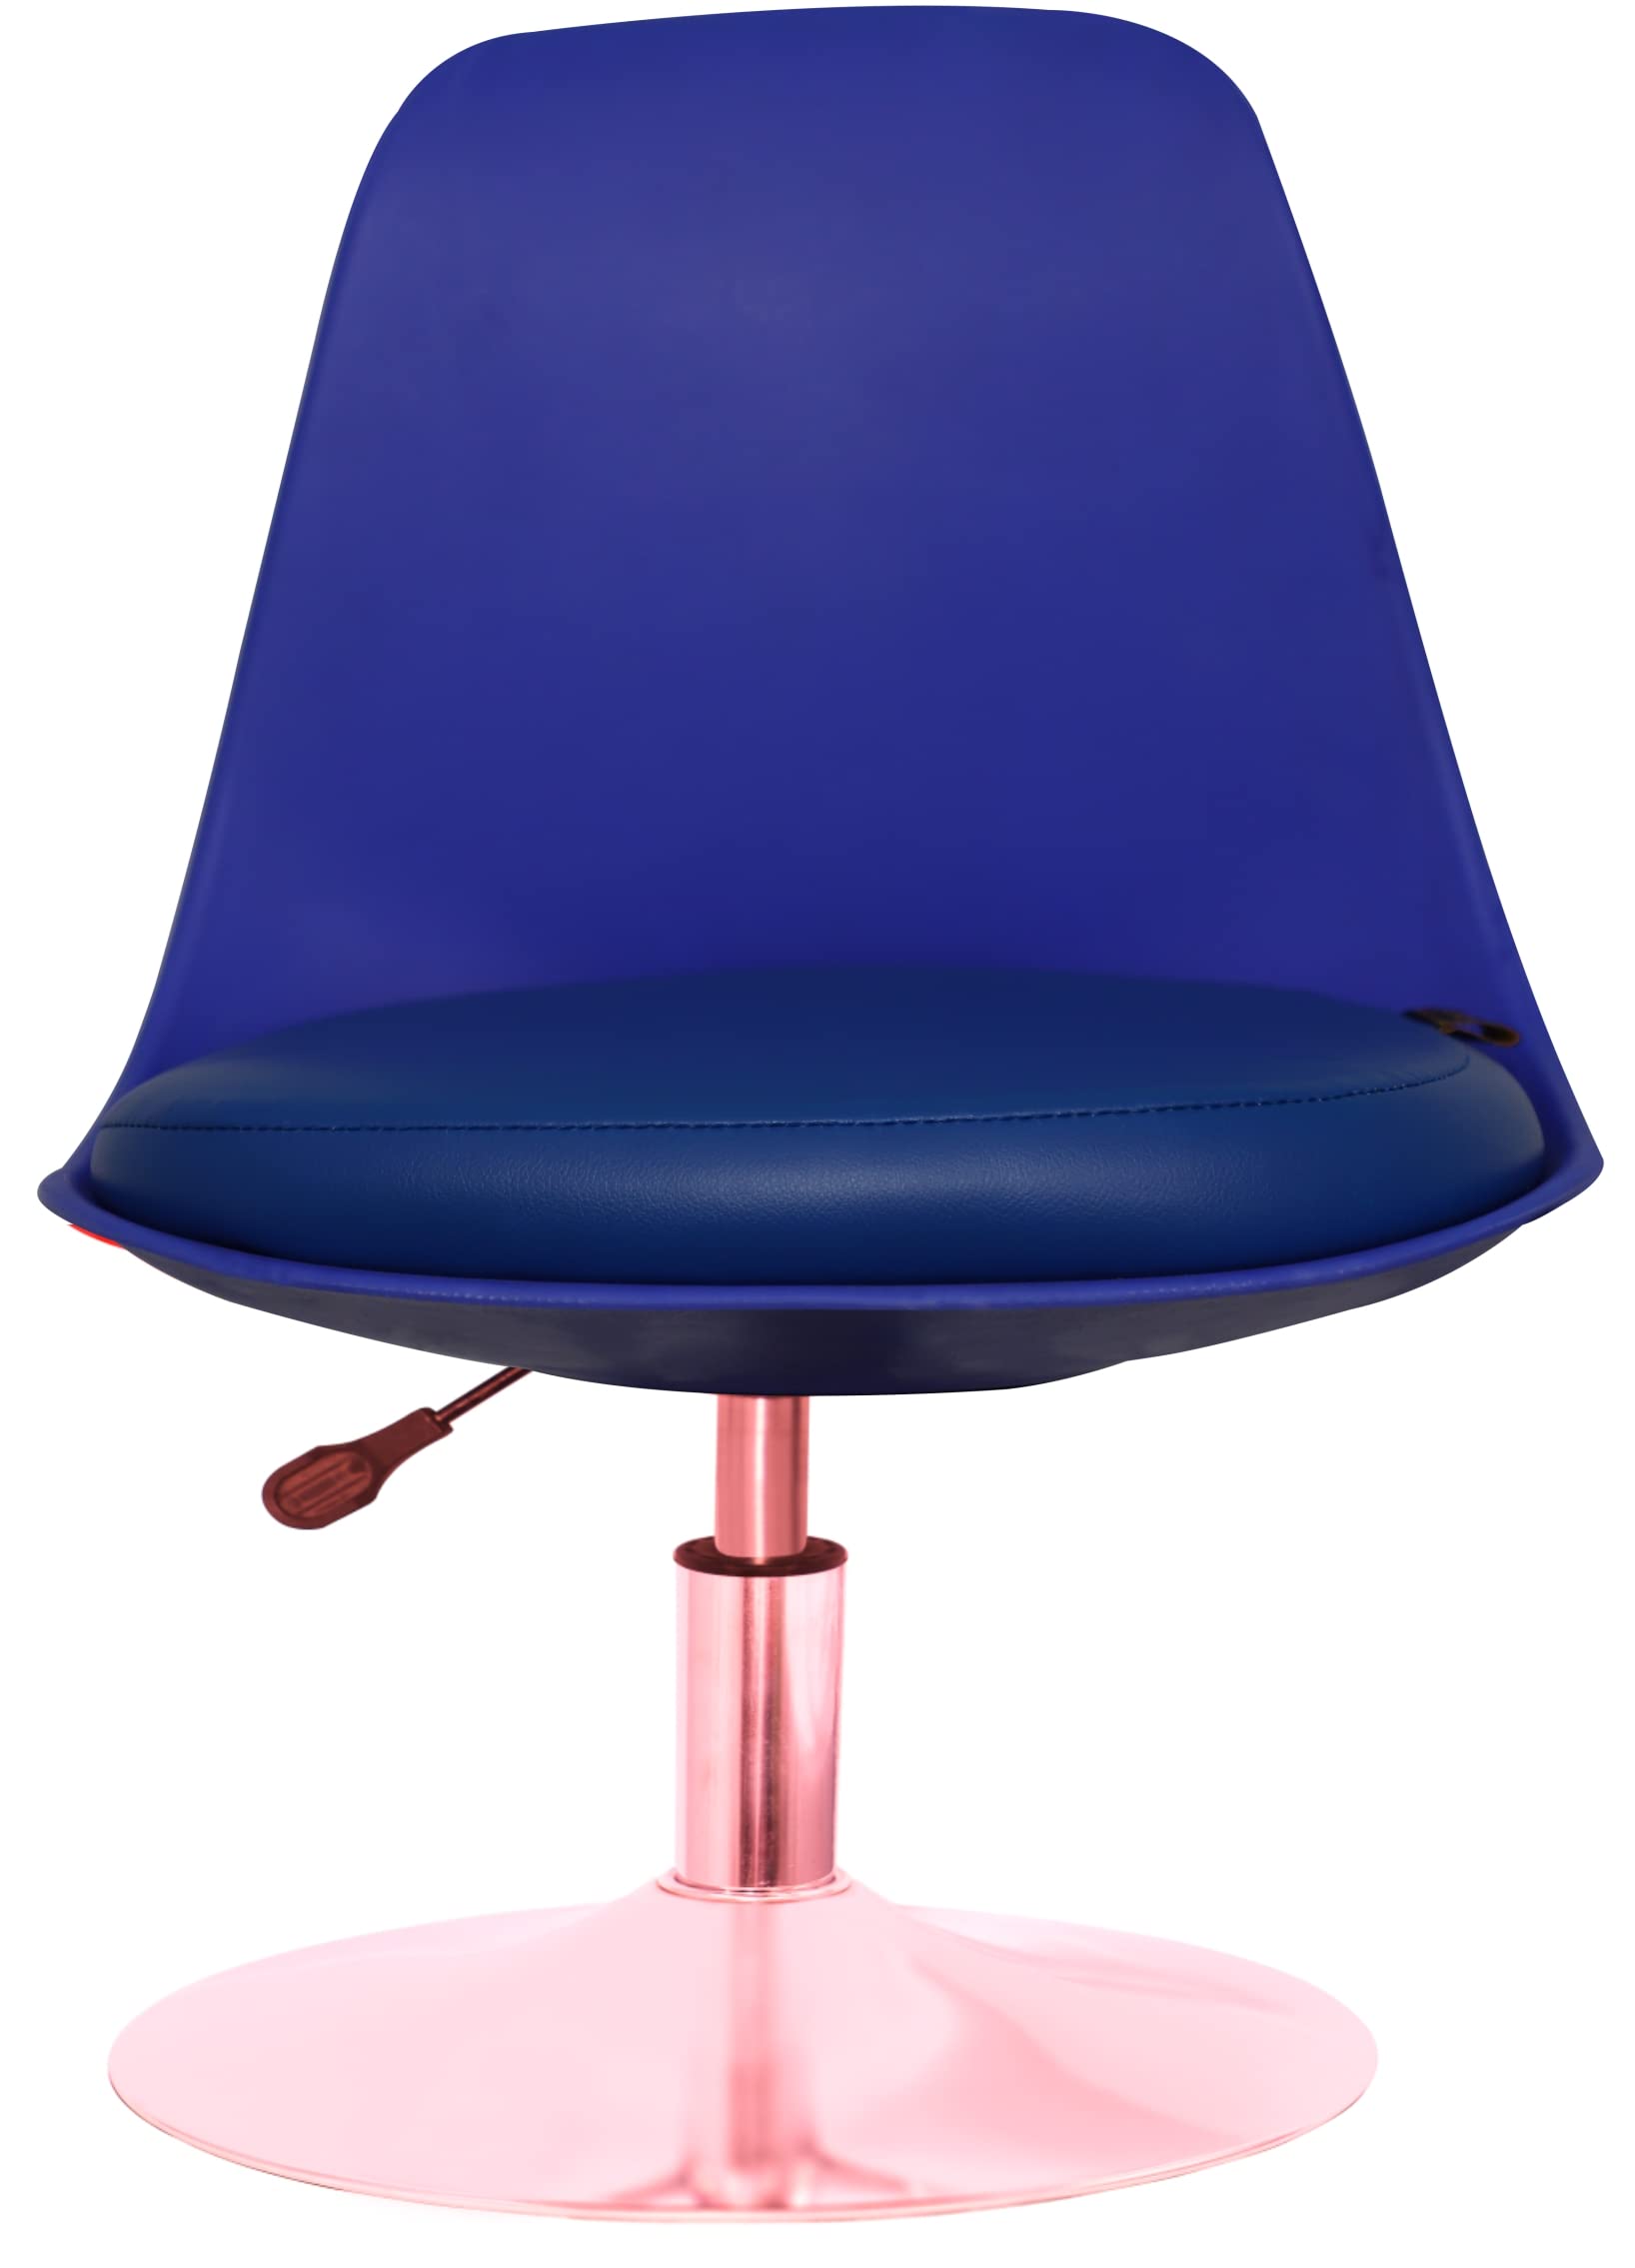 SAVYA HOME Kids Kiddle Desk Chair| Revolving | High Chair | Height Adjustment | Cushioned | Study | Kids(Ergonomic Chair, Qty-1, Blue)